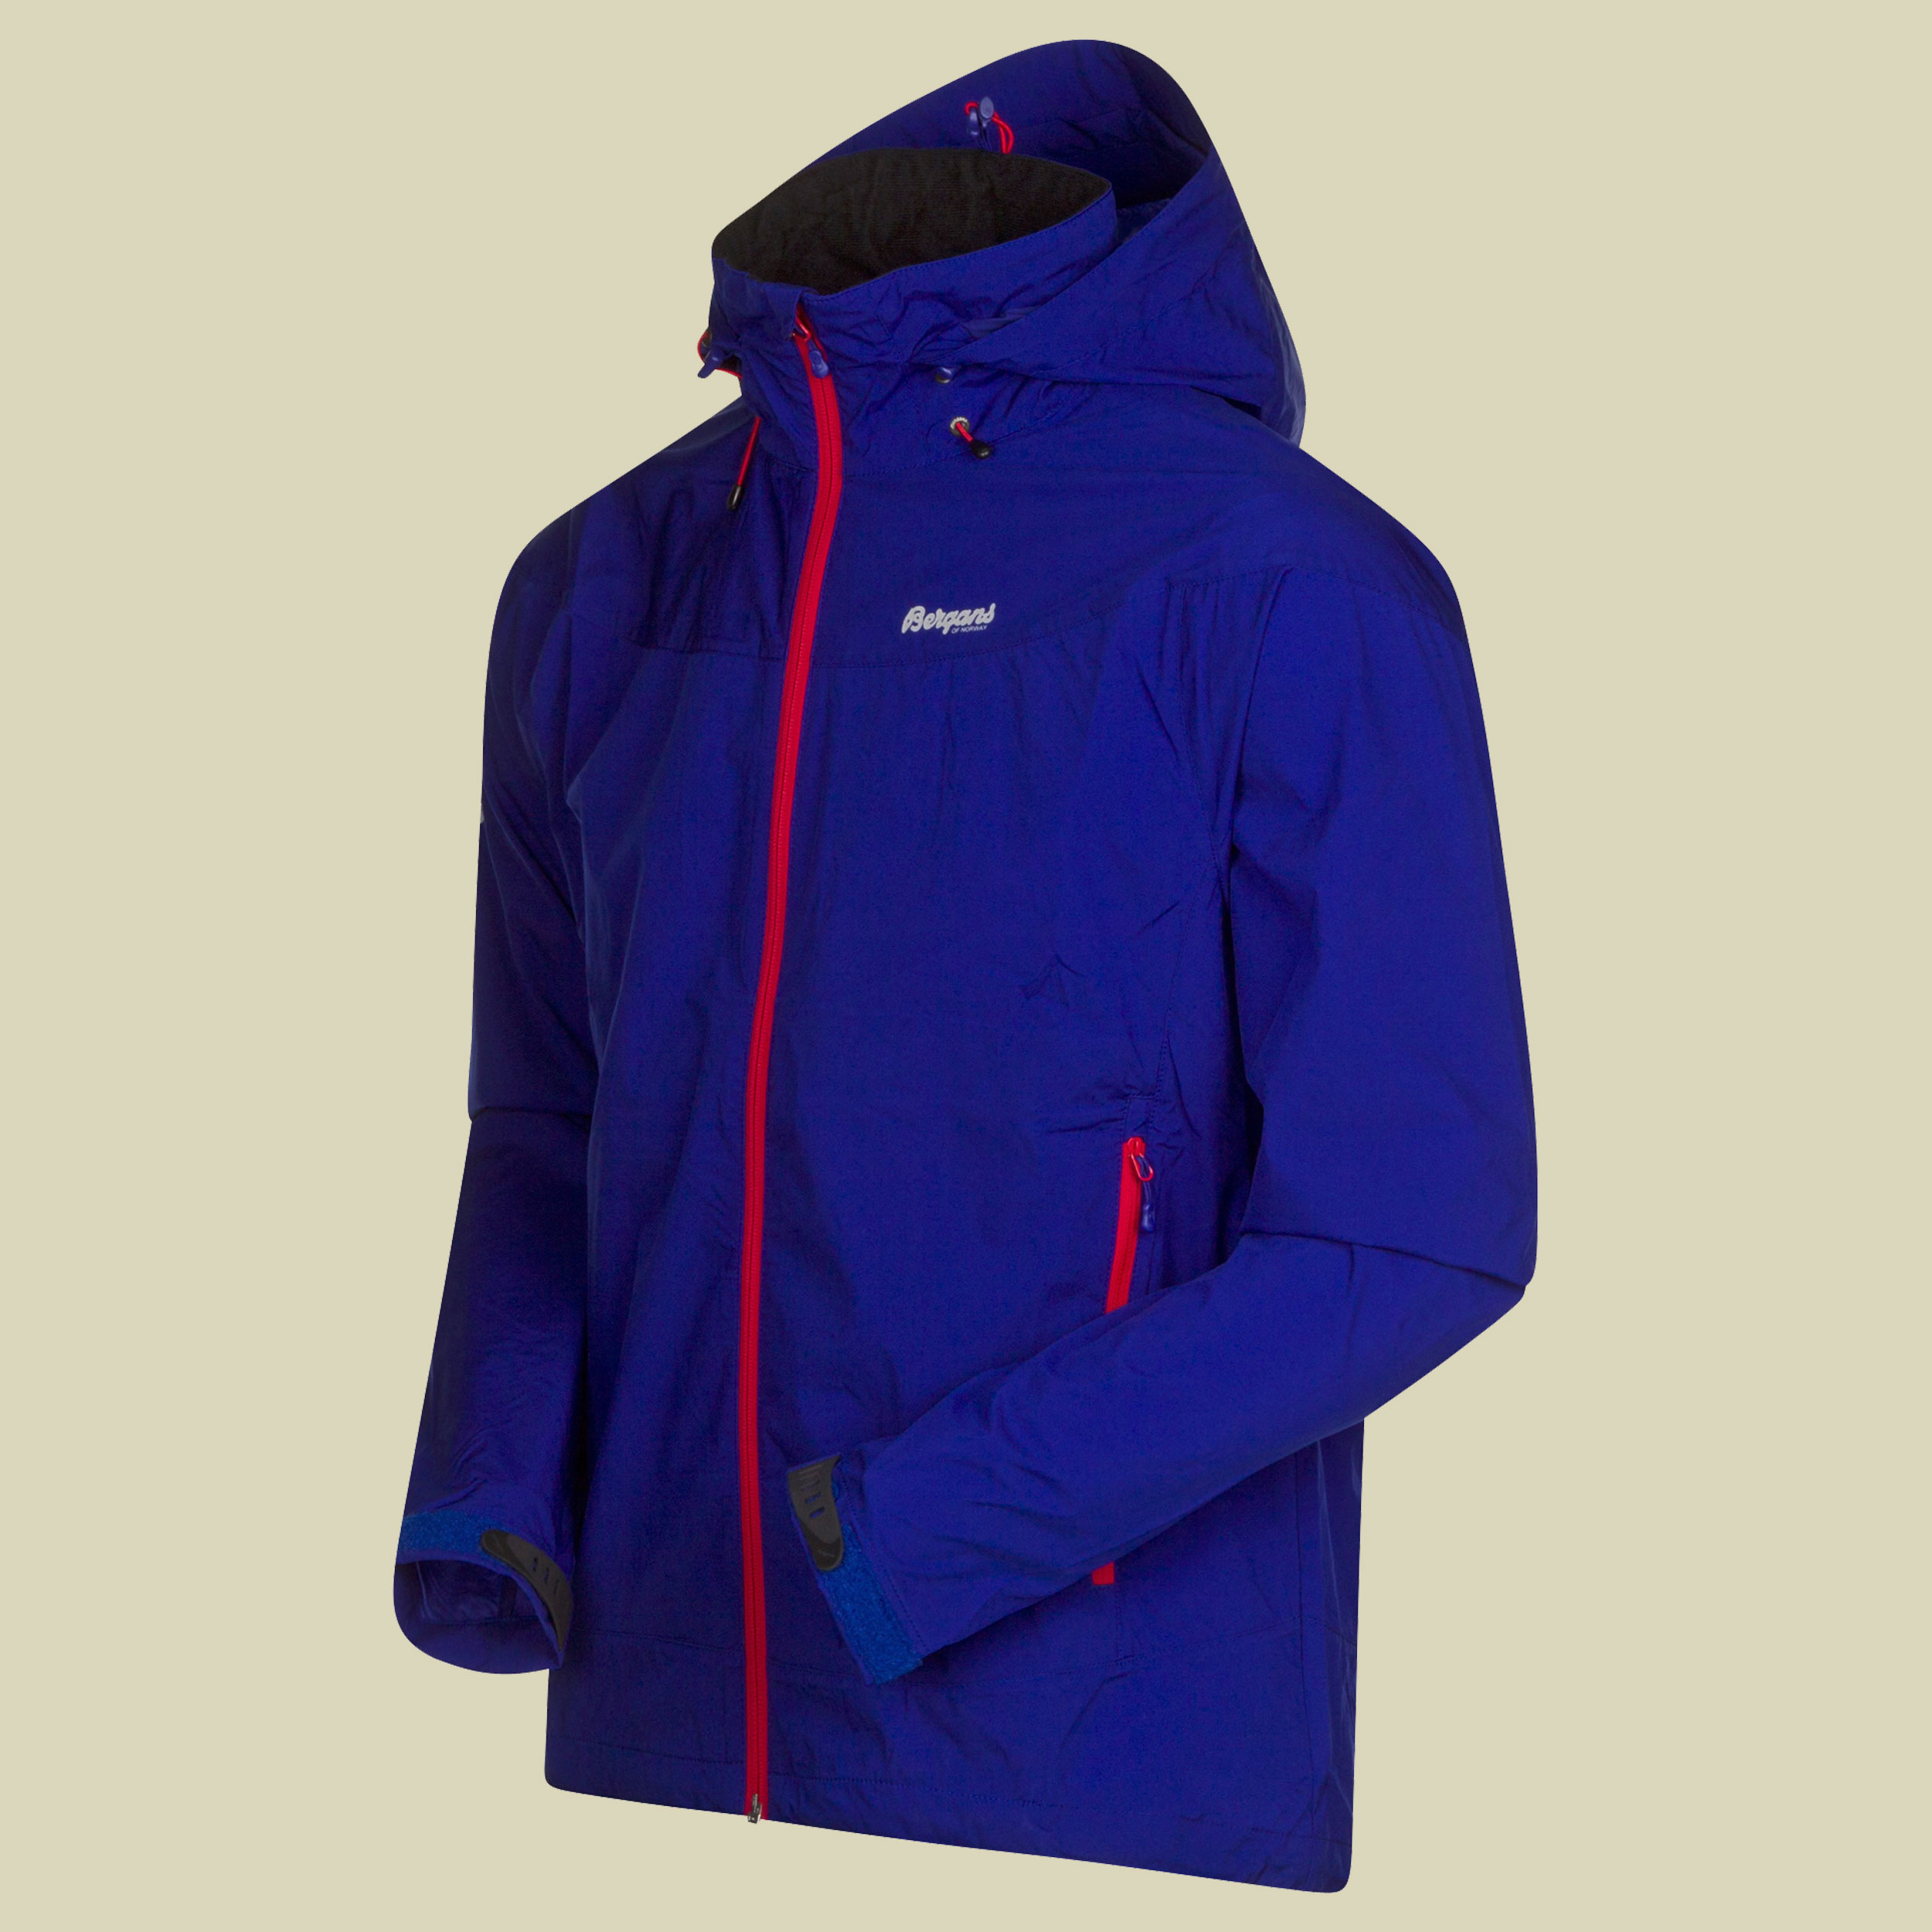 Microlight Jacket Men Größe S Farbe ink blue/red